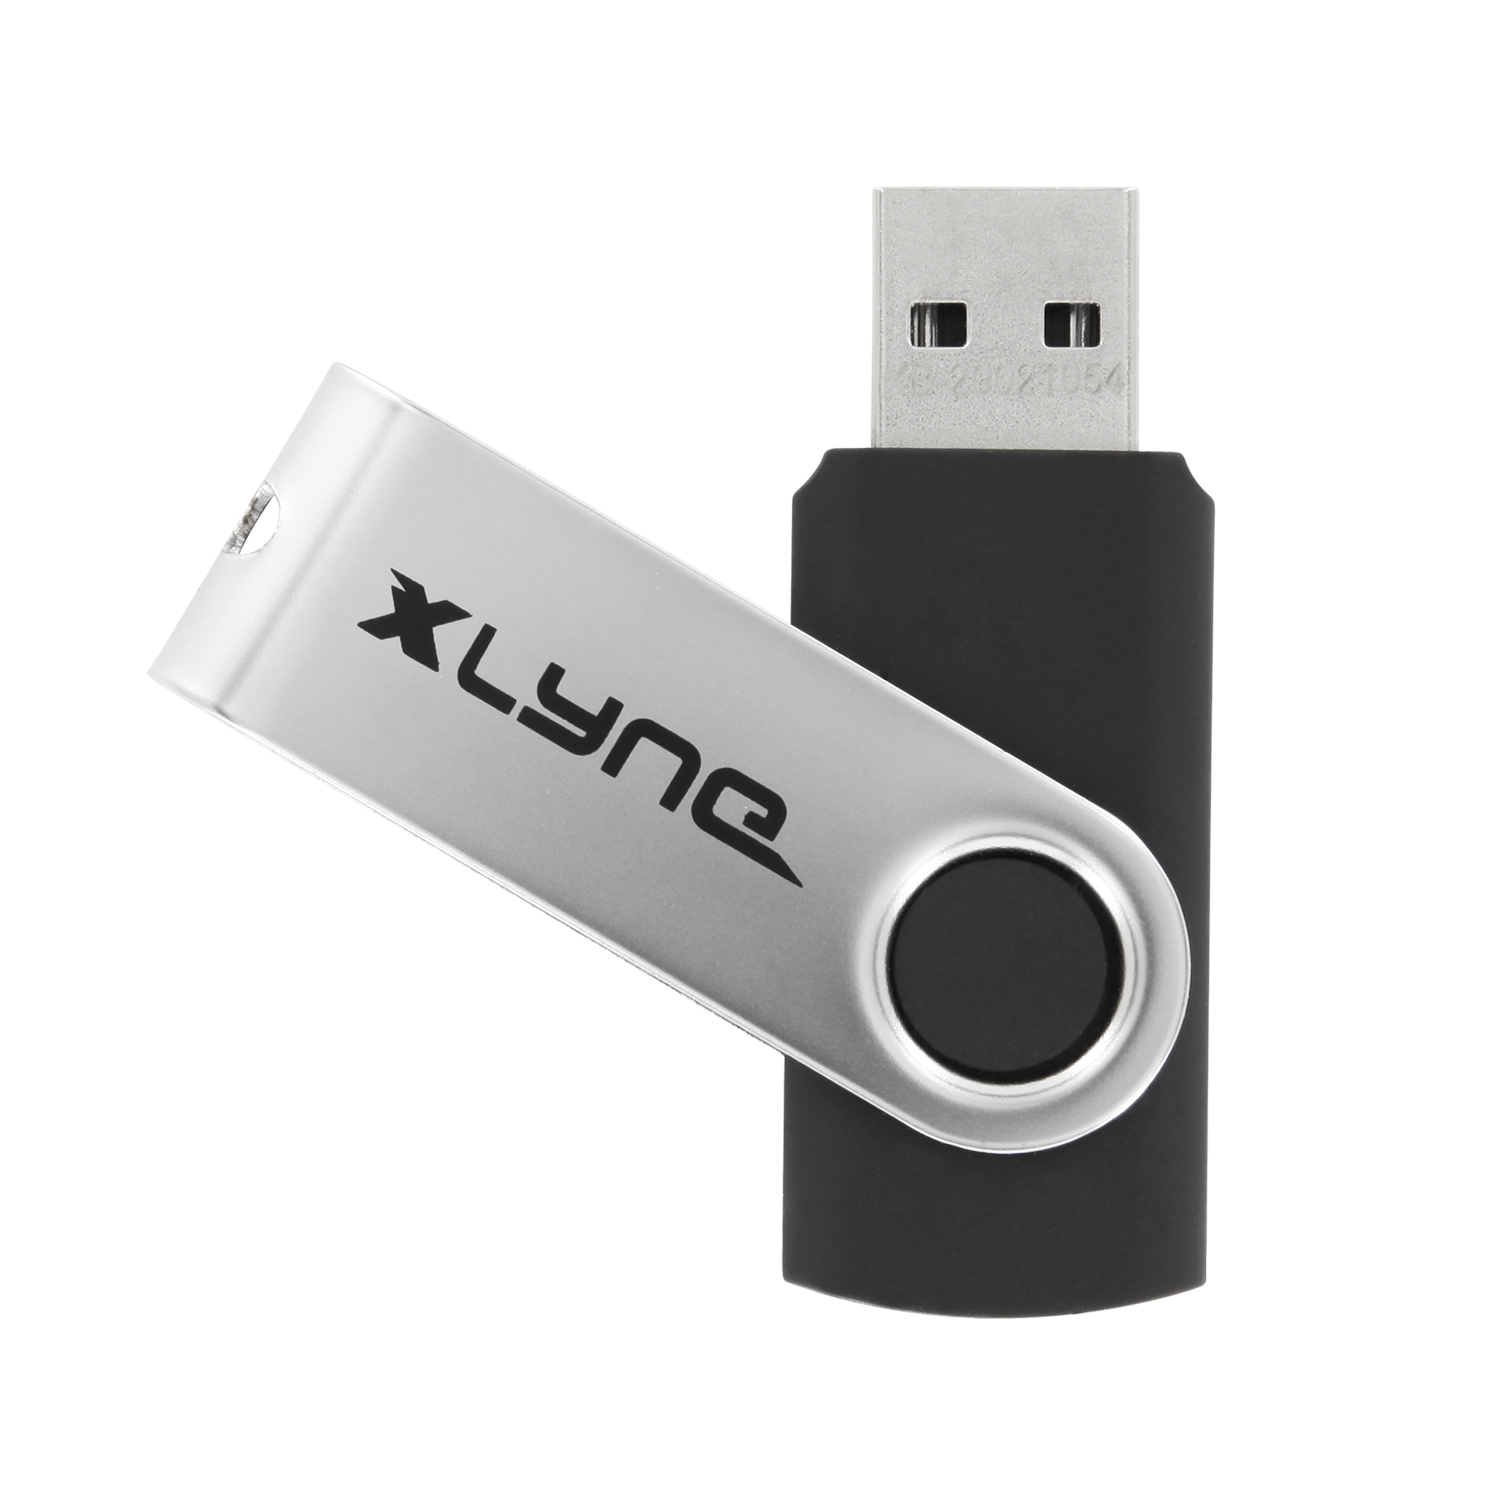 GB) USB 4 / - (SCHWARZ 2.0 SILBER, Stick XLYNE GB 4 USB